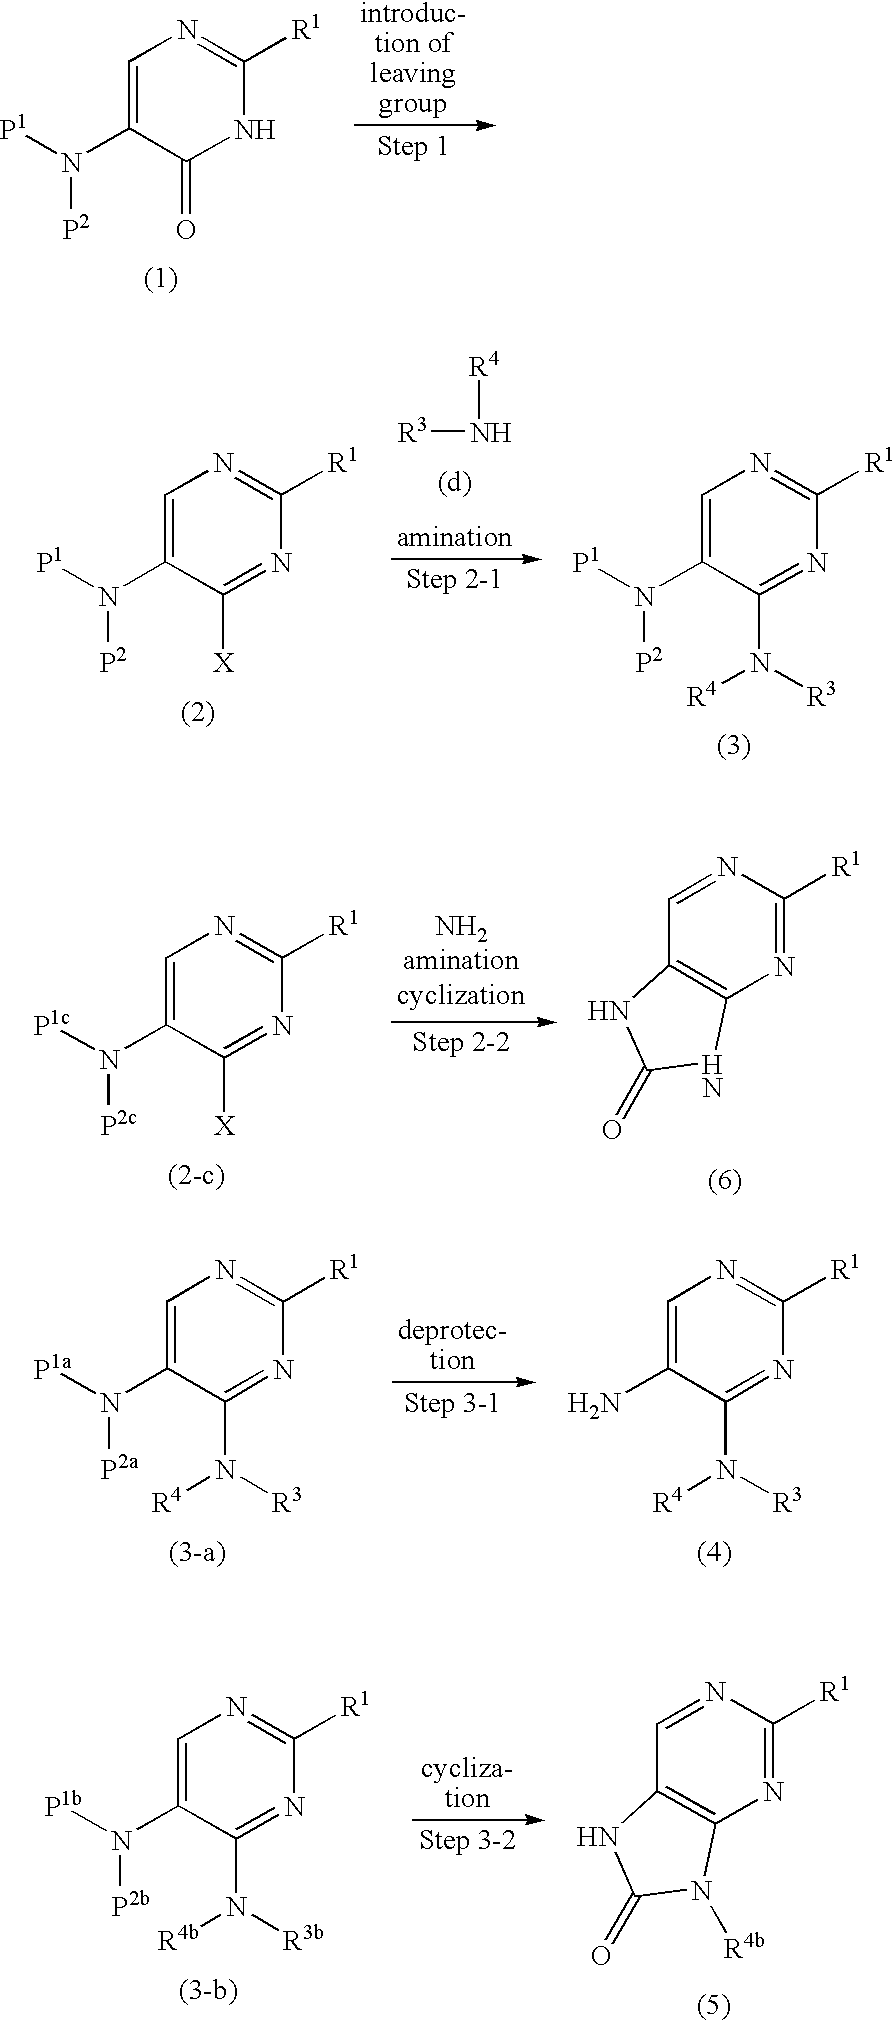 Production method of diaminopyrimidine compounds